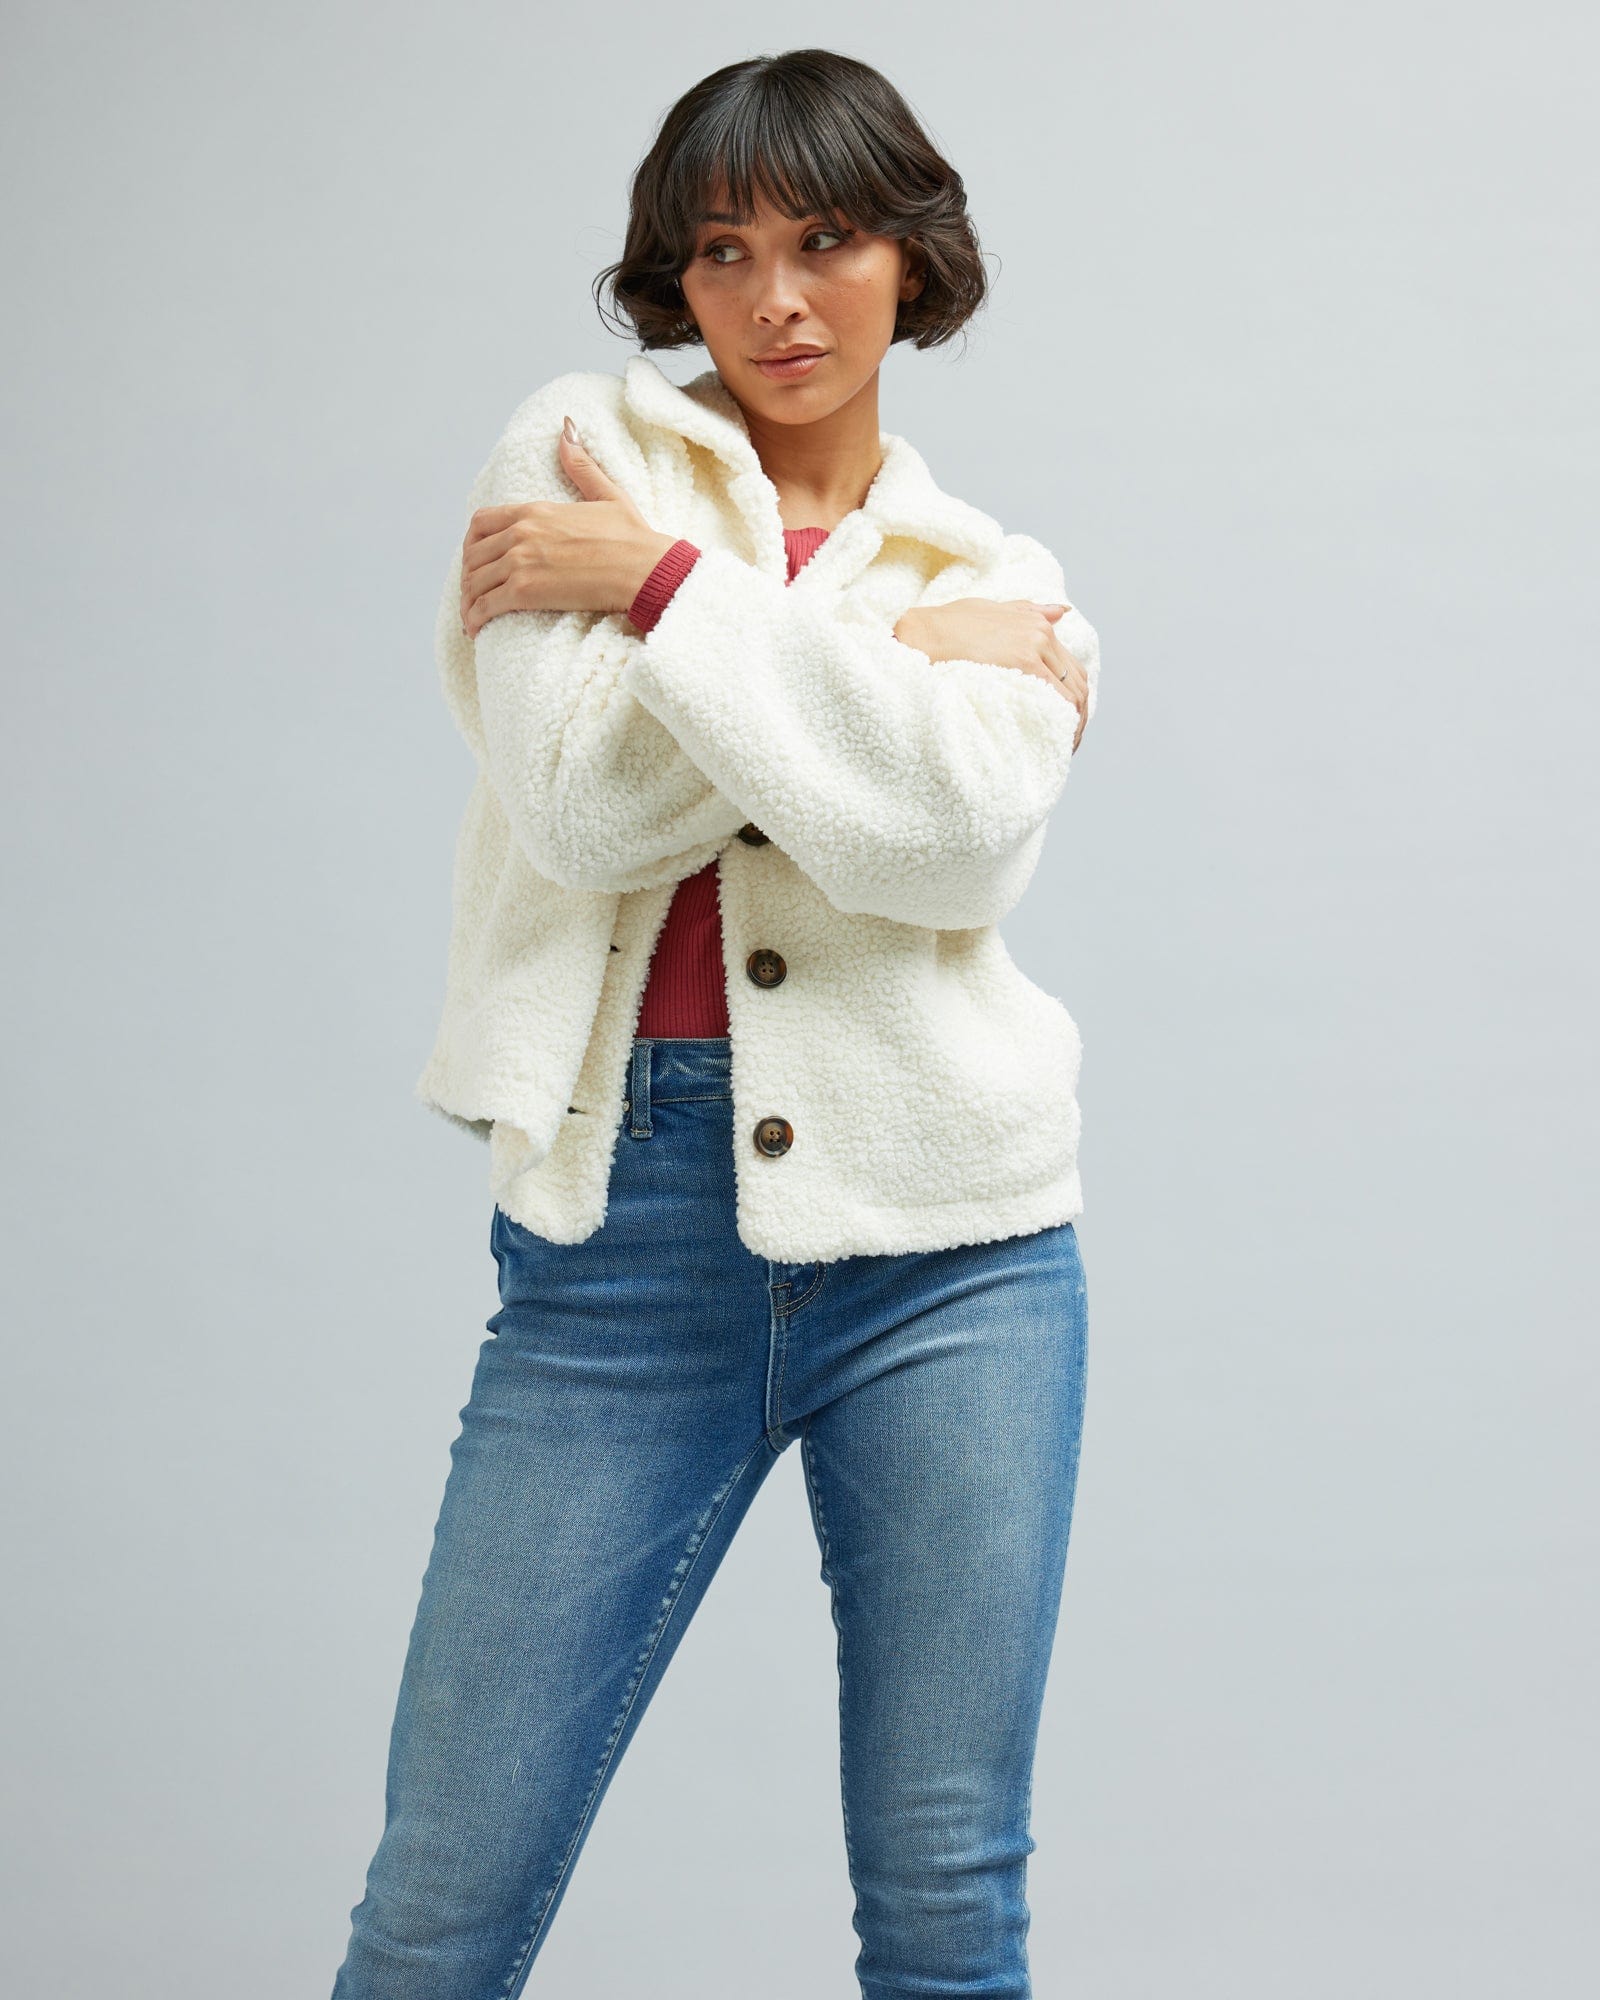 Woman in a long sleeve, white, sherpa jacket